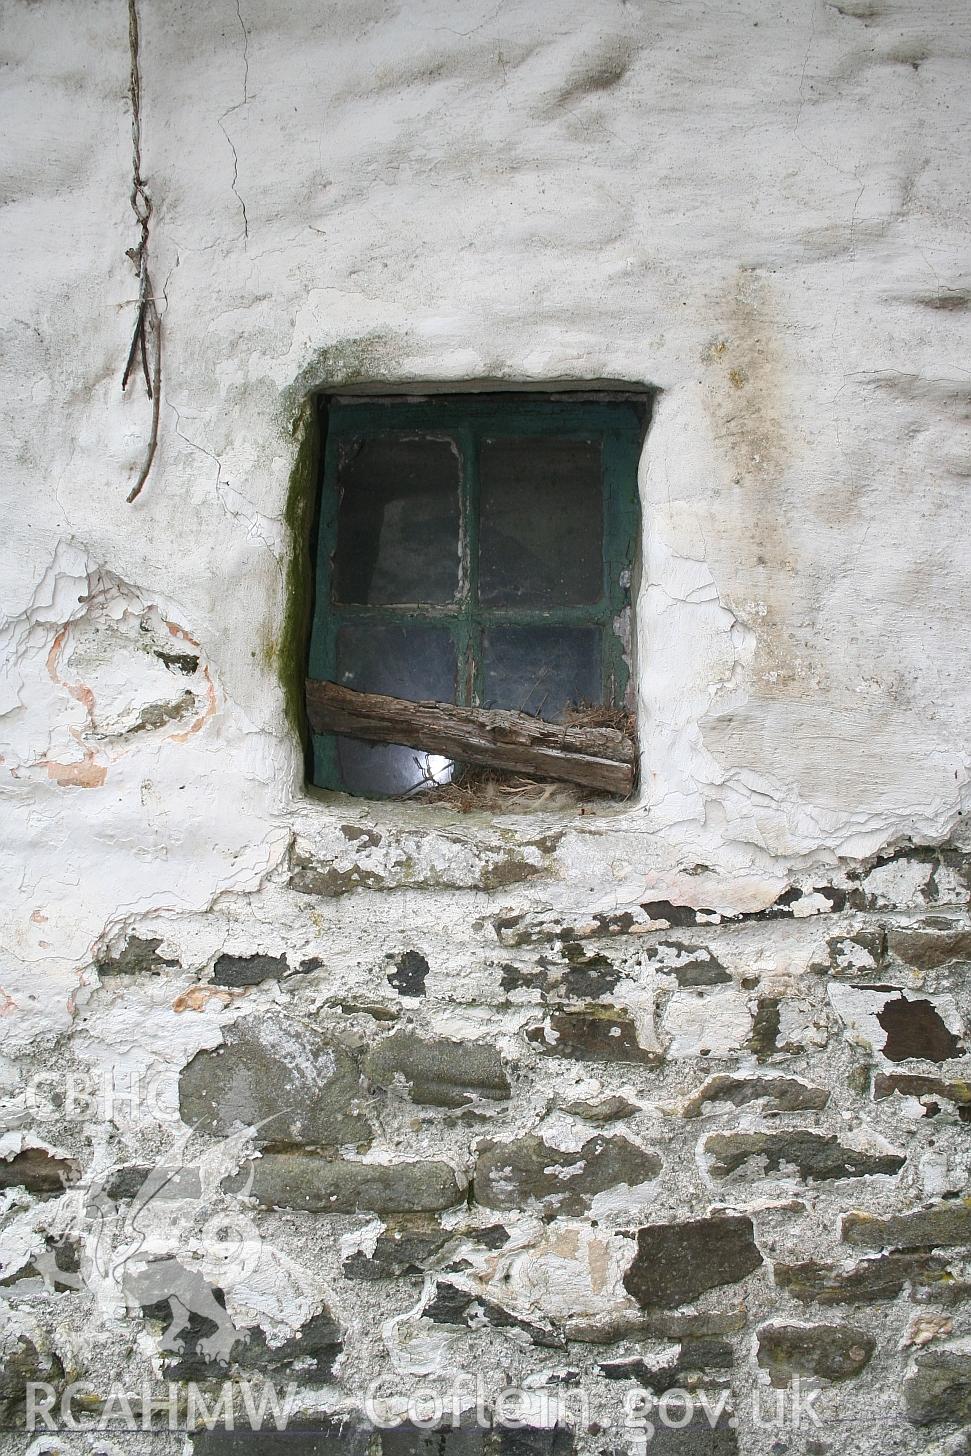 Dwelling end of Allt Ddu farmhouse, external window detail, east wall.